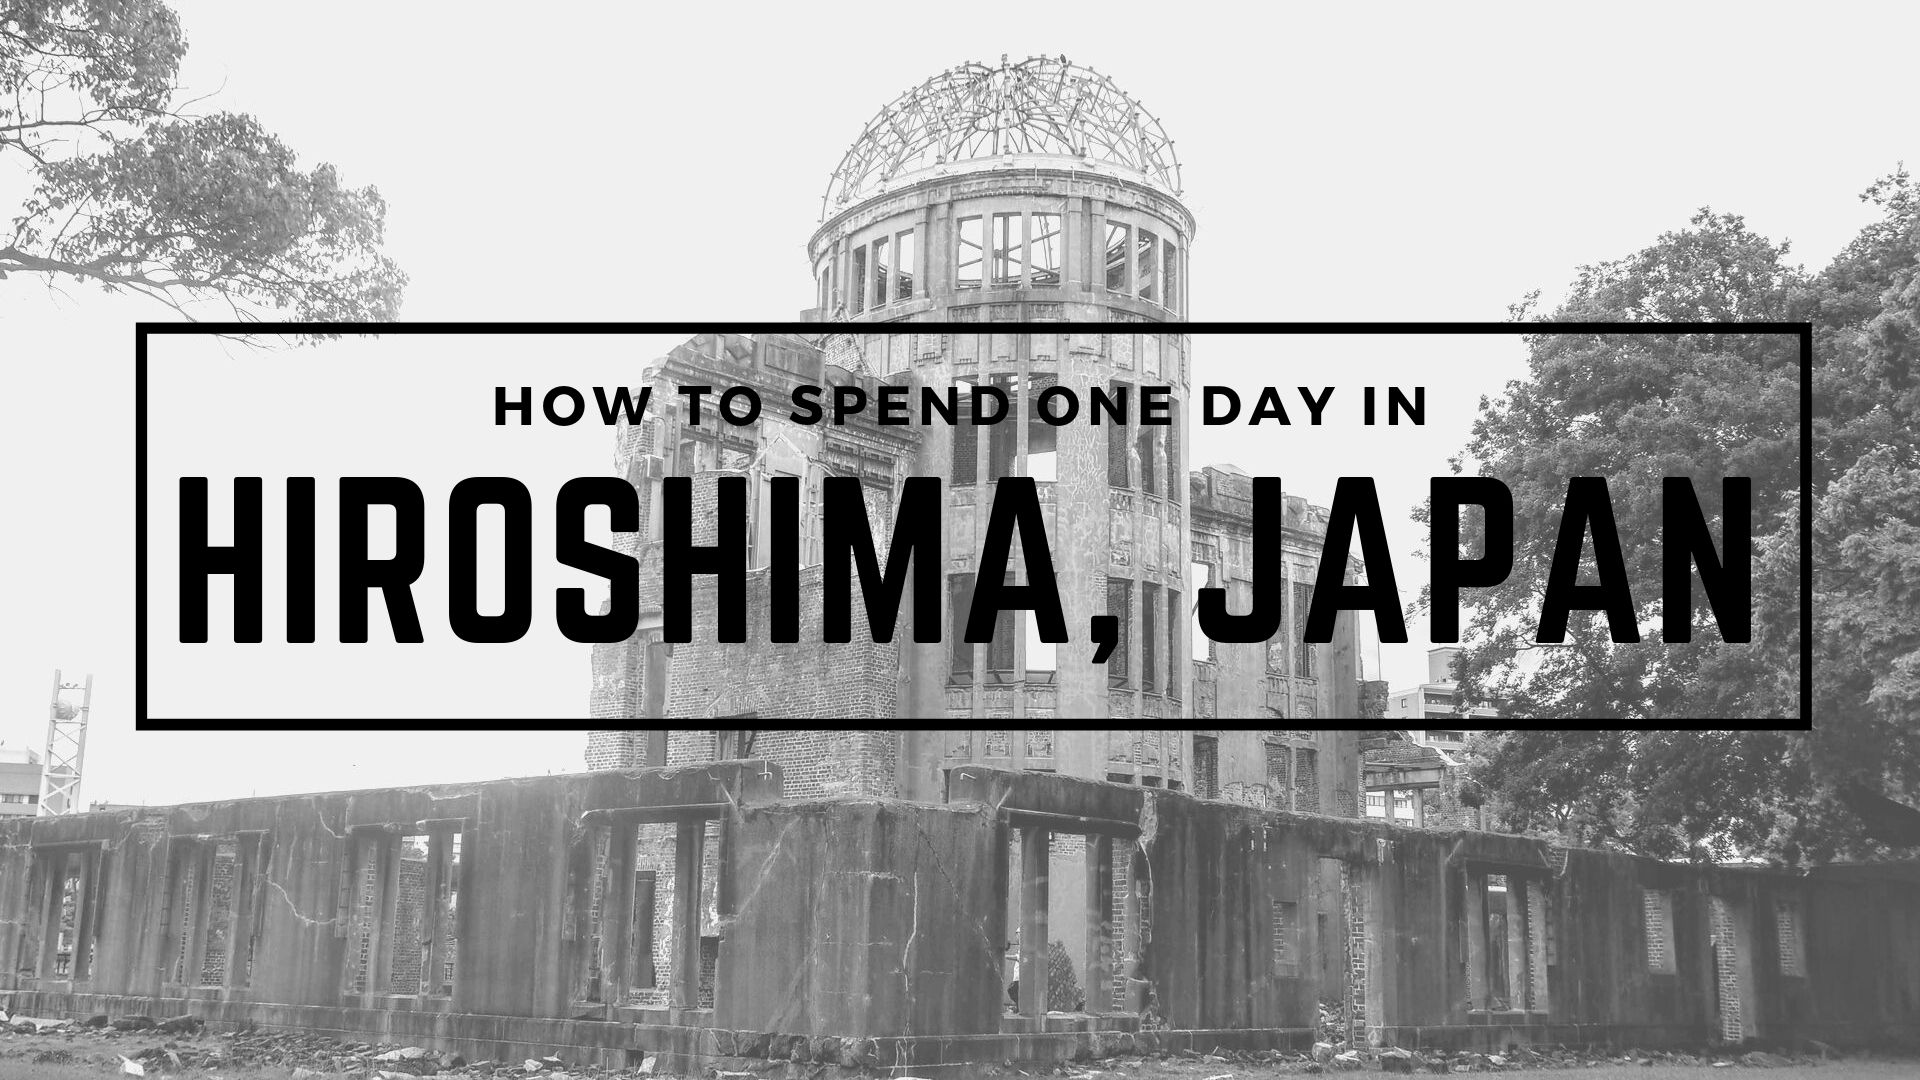 One day in hiroshima itinerary things to do in hiroshima, atomic bomb memorial, peace memorial park, childrens peace memorial, okonomiyakimura cover